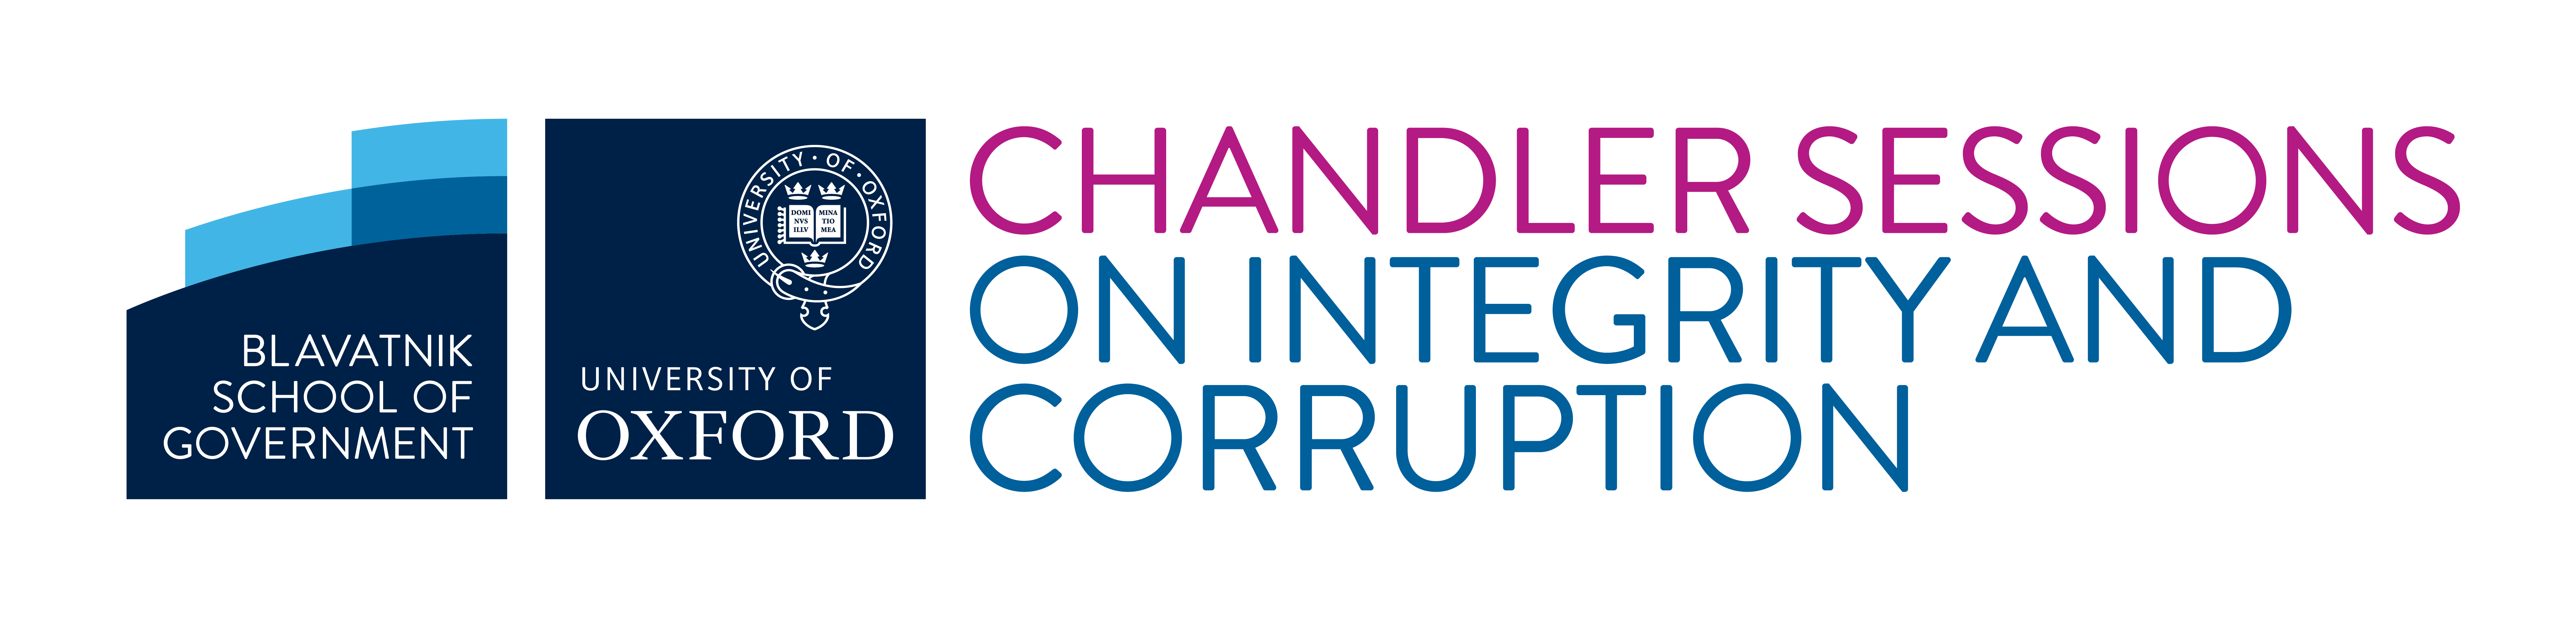 Chandler sessions logo